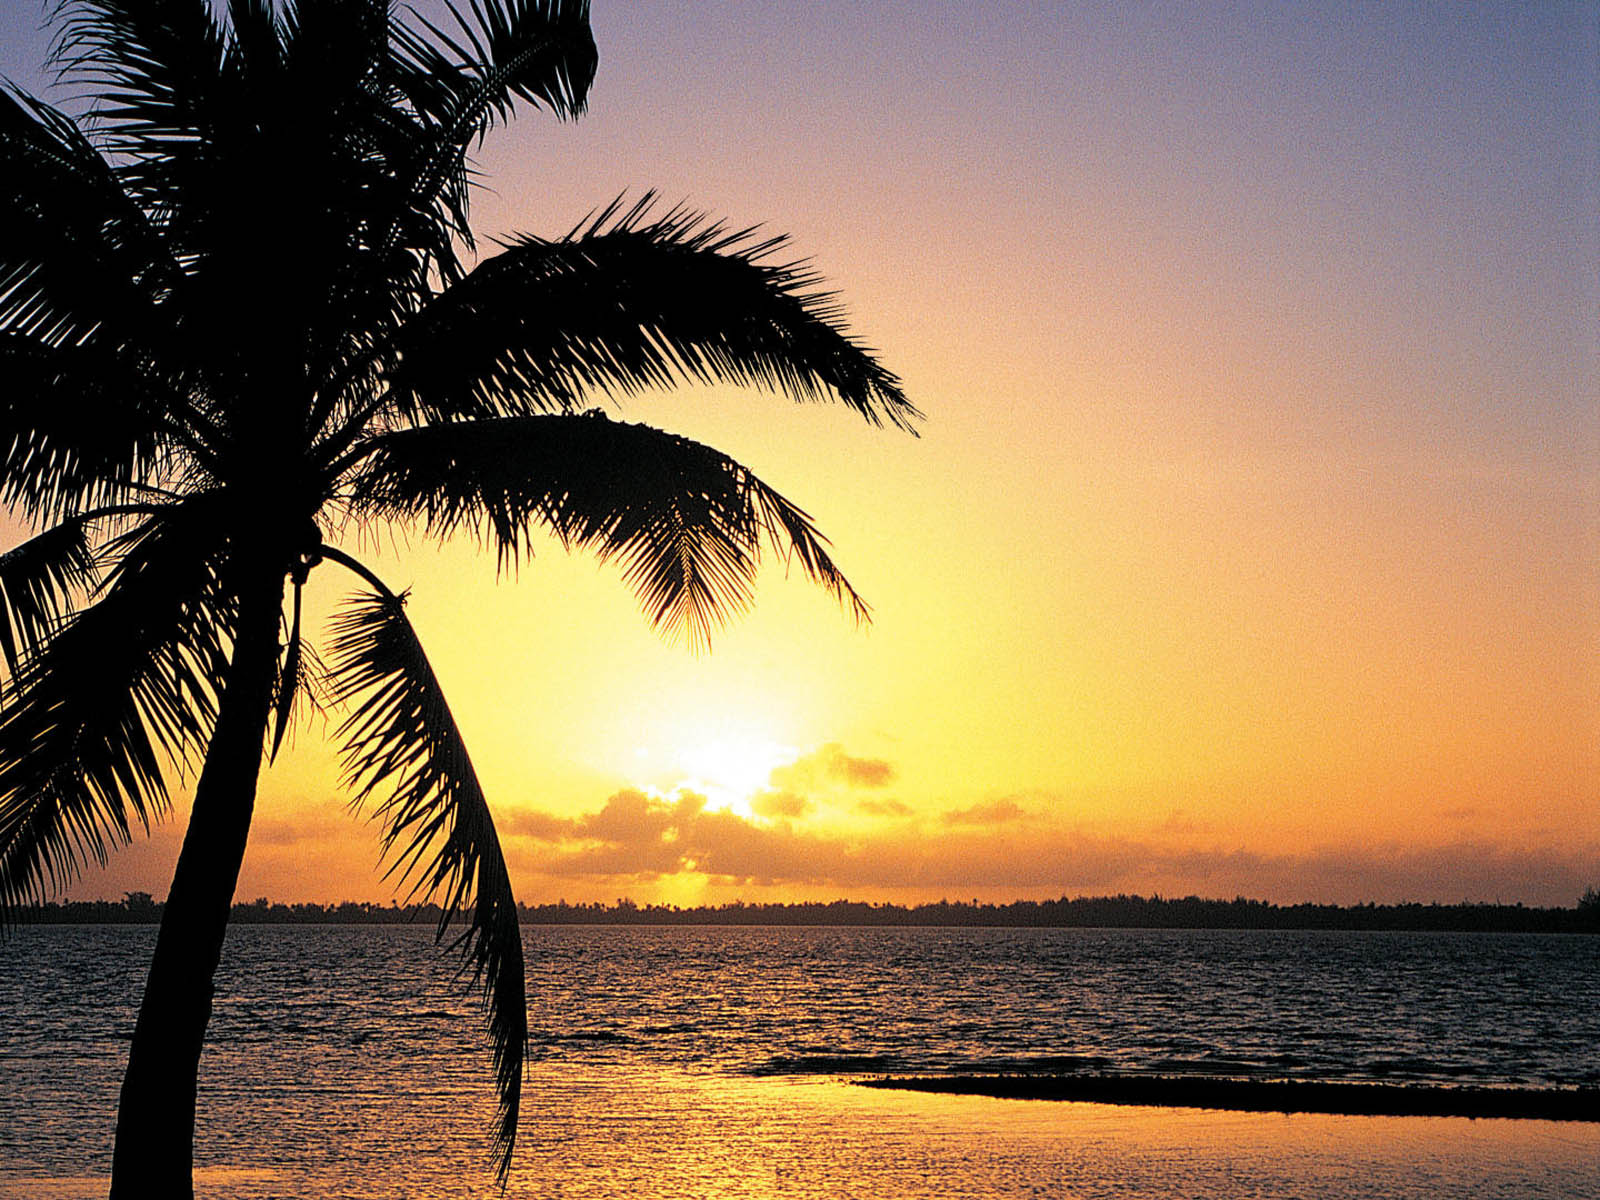 the Island Sunset Wallpapers, Island Sunset Desktop Wallpapers, Island ...